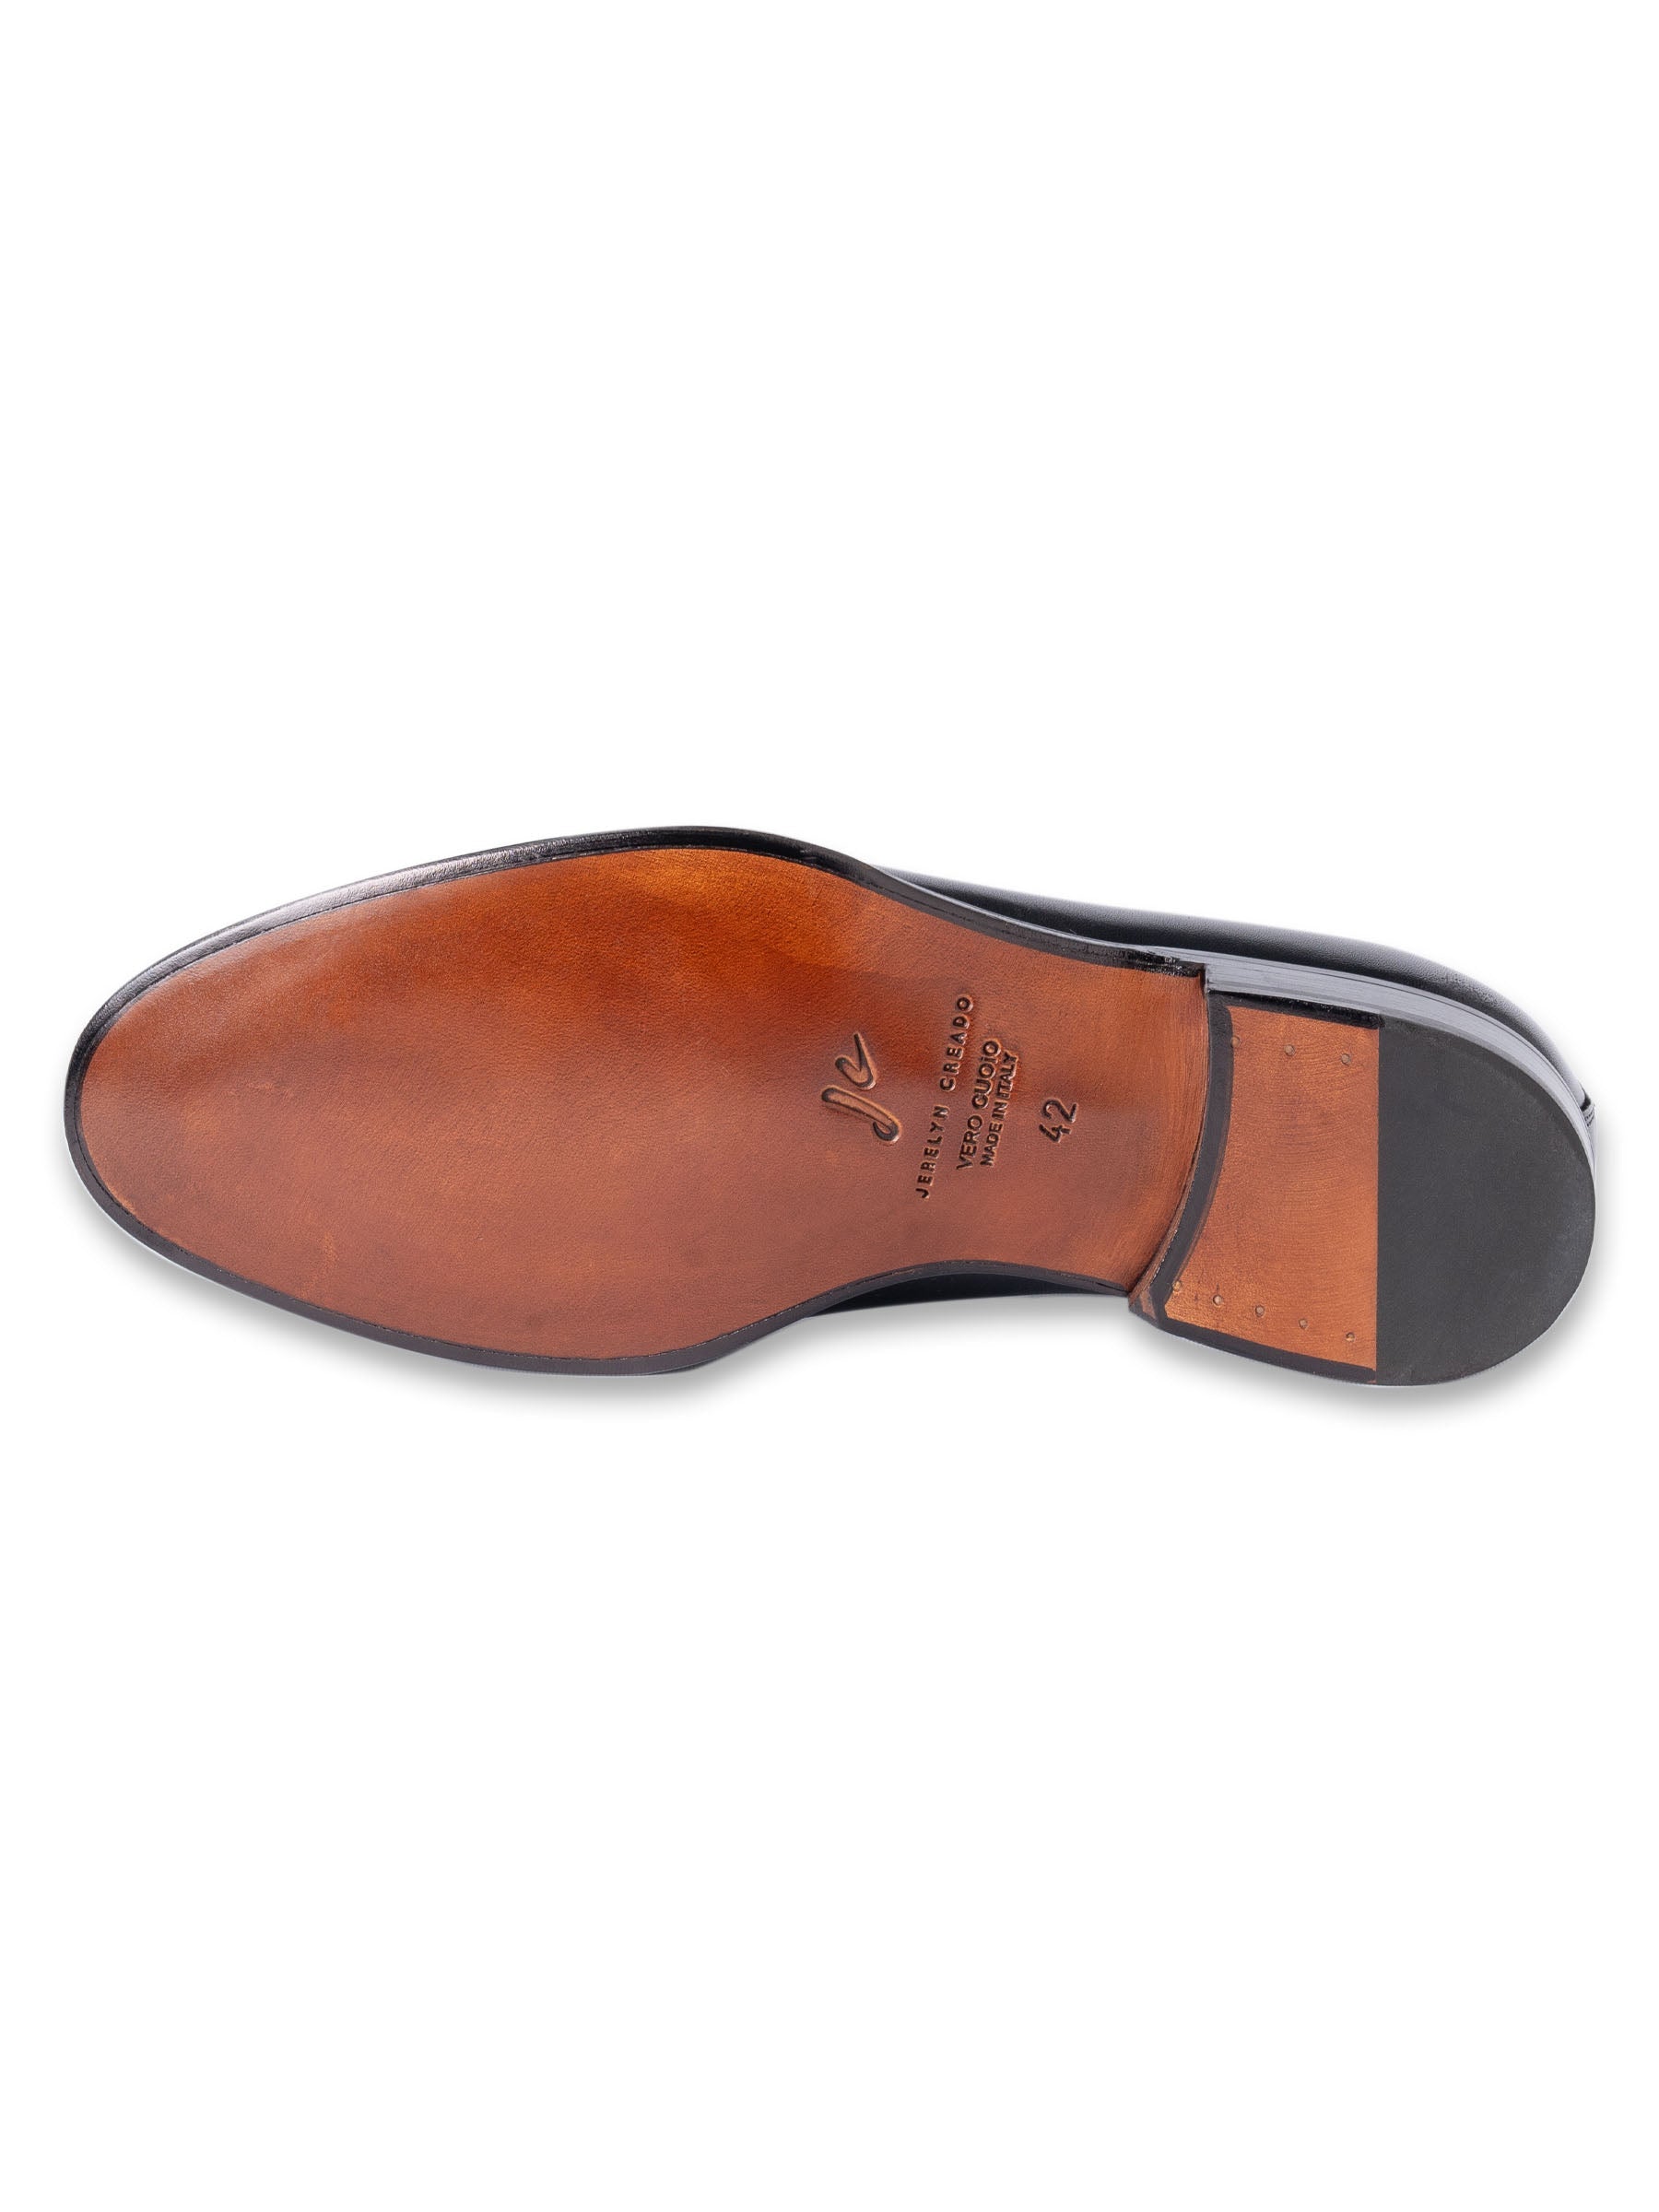 Emilio Italian Leather Loafers - Classic Elegance